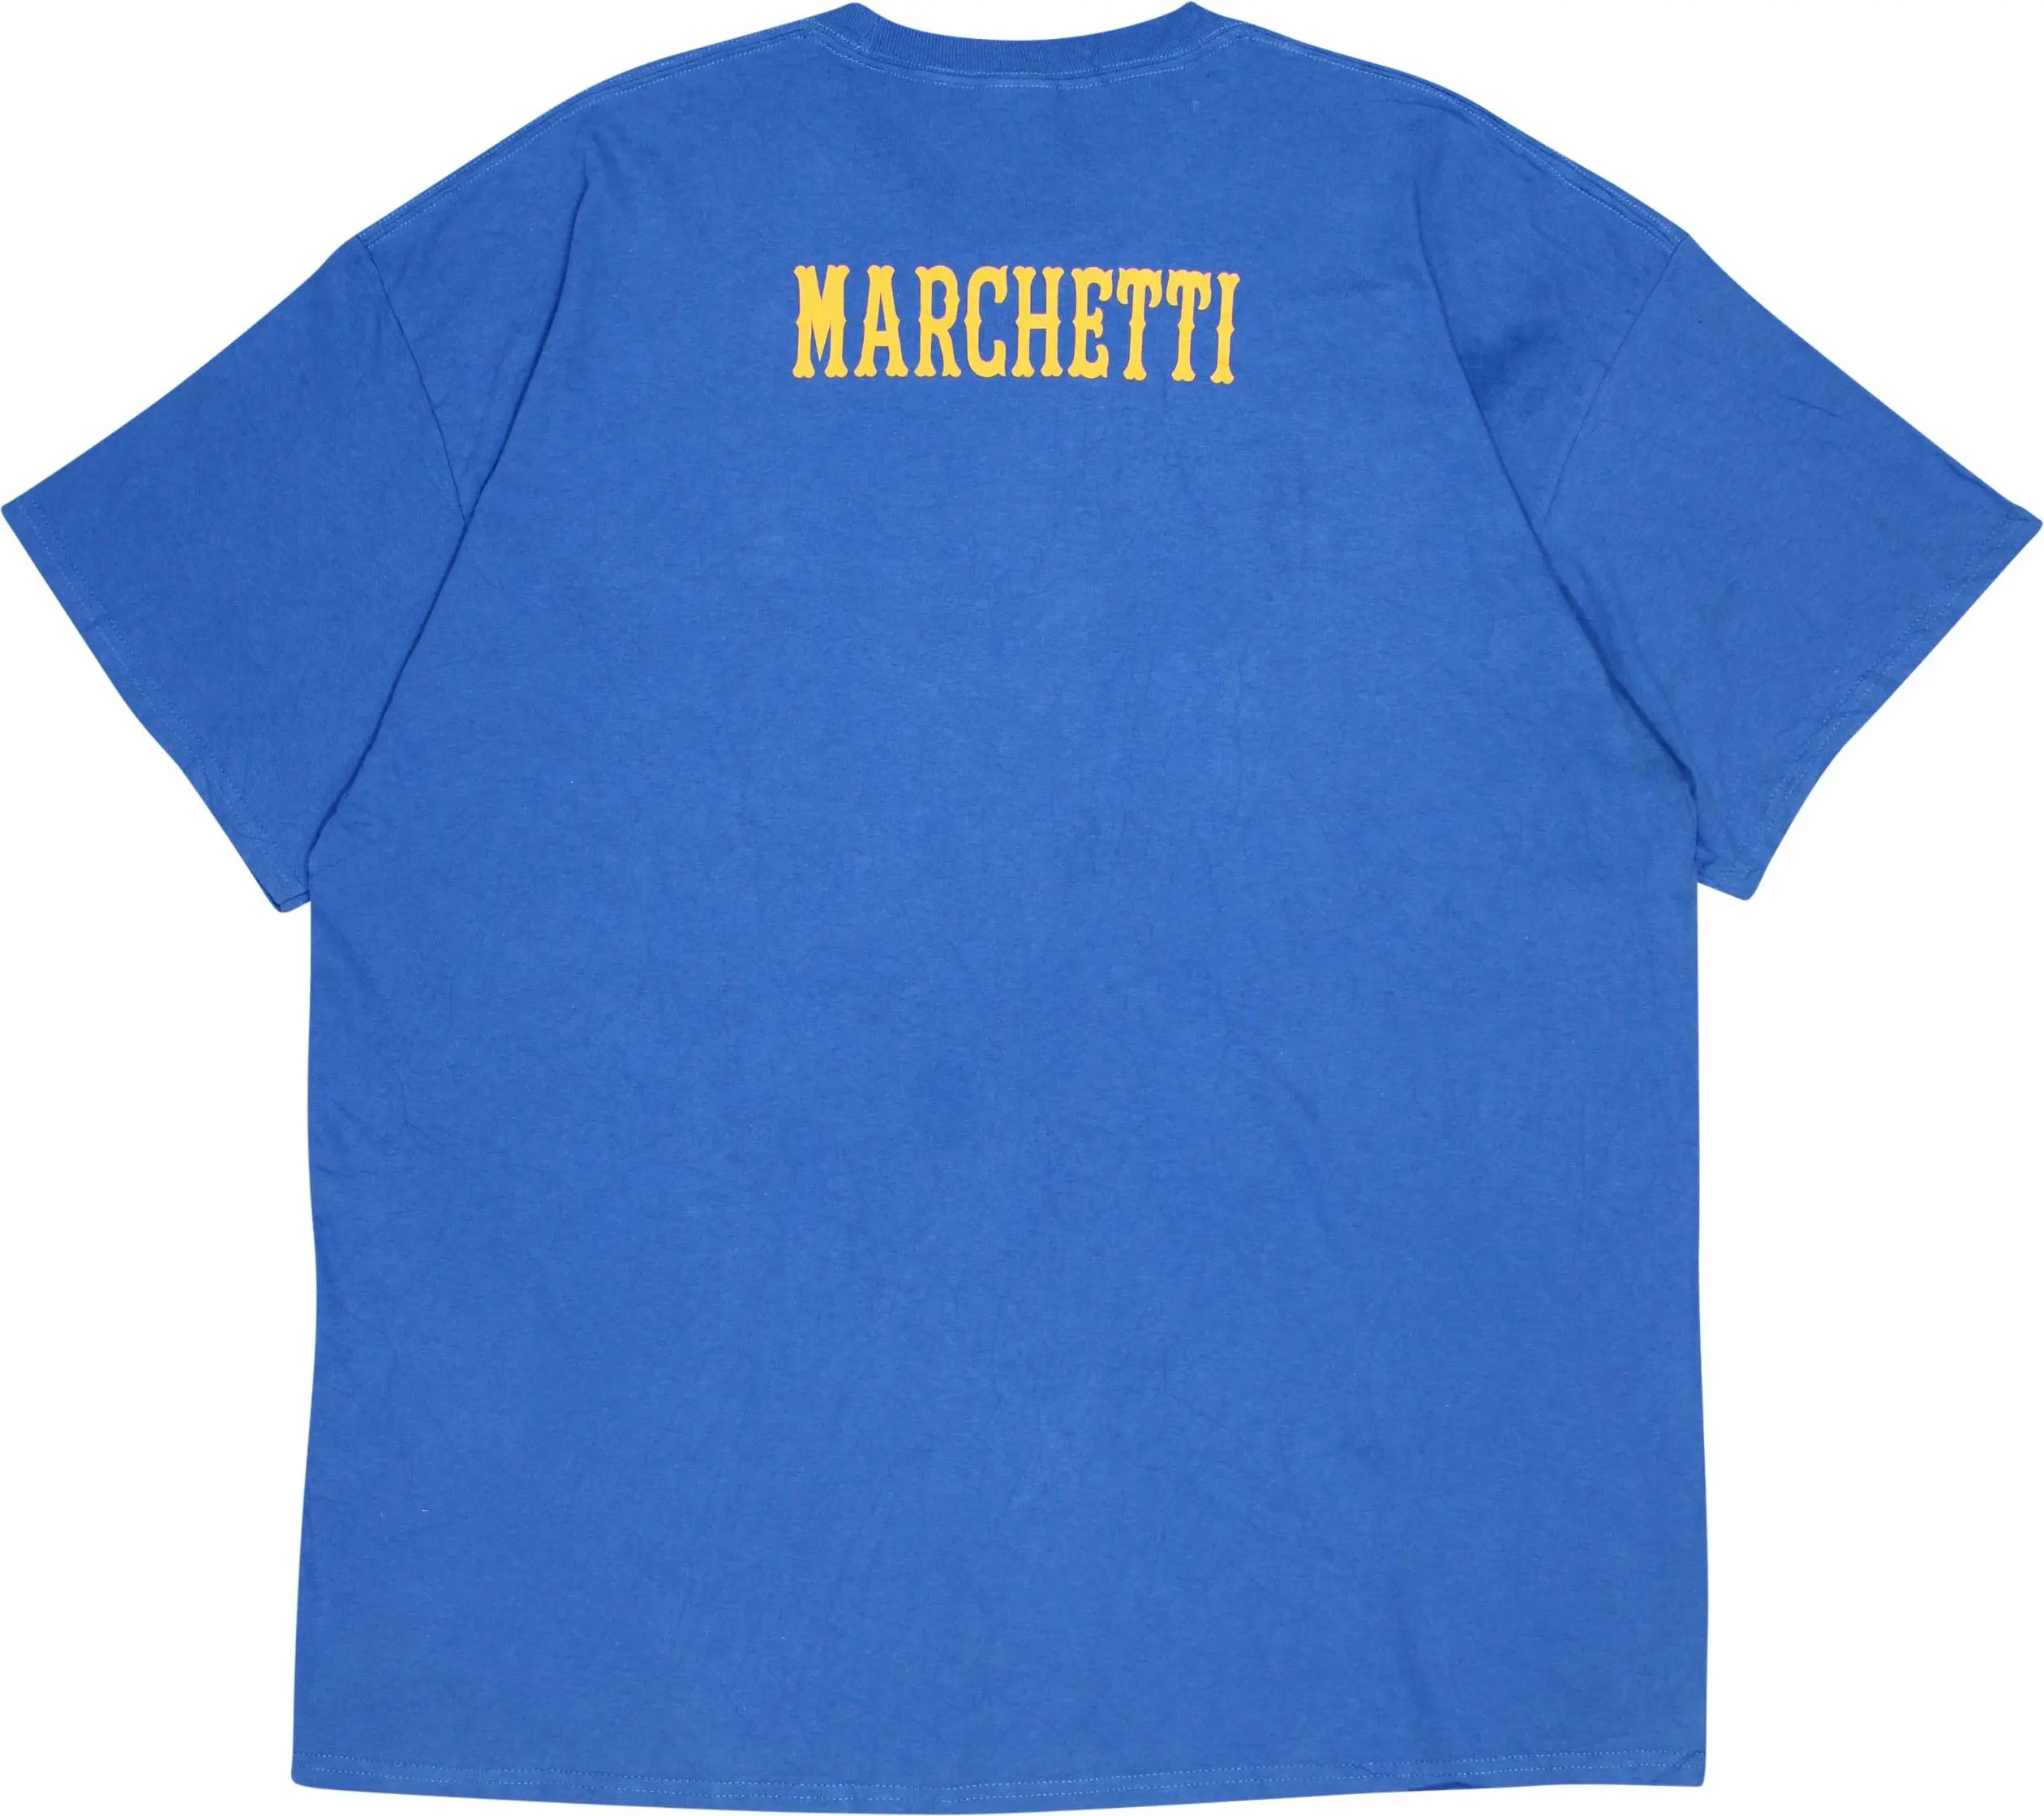 Port & Company - Magnolia Little League T-Shirt- ThriftTale.com - Vintage and second handclothing